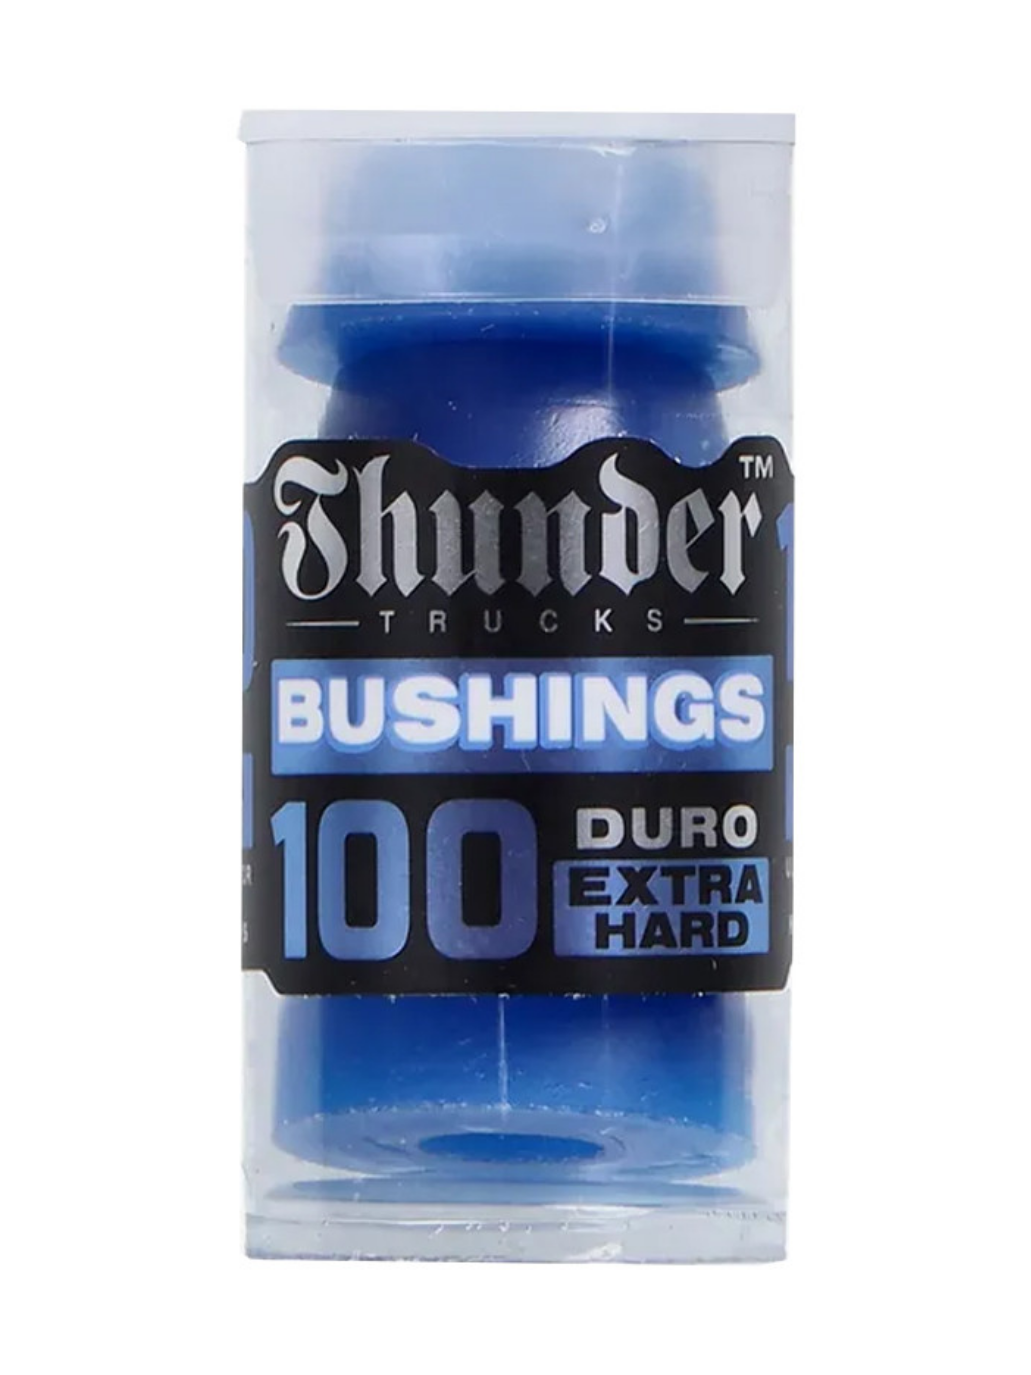 Gomas ejes Thunder Premium 100A Bushings (Deep Blue) | Gomas / Bushings de Skate | Skate Parts | Skate Shop | Tablas, Ejes, Ruedas,... | surfdevils.com